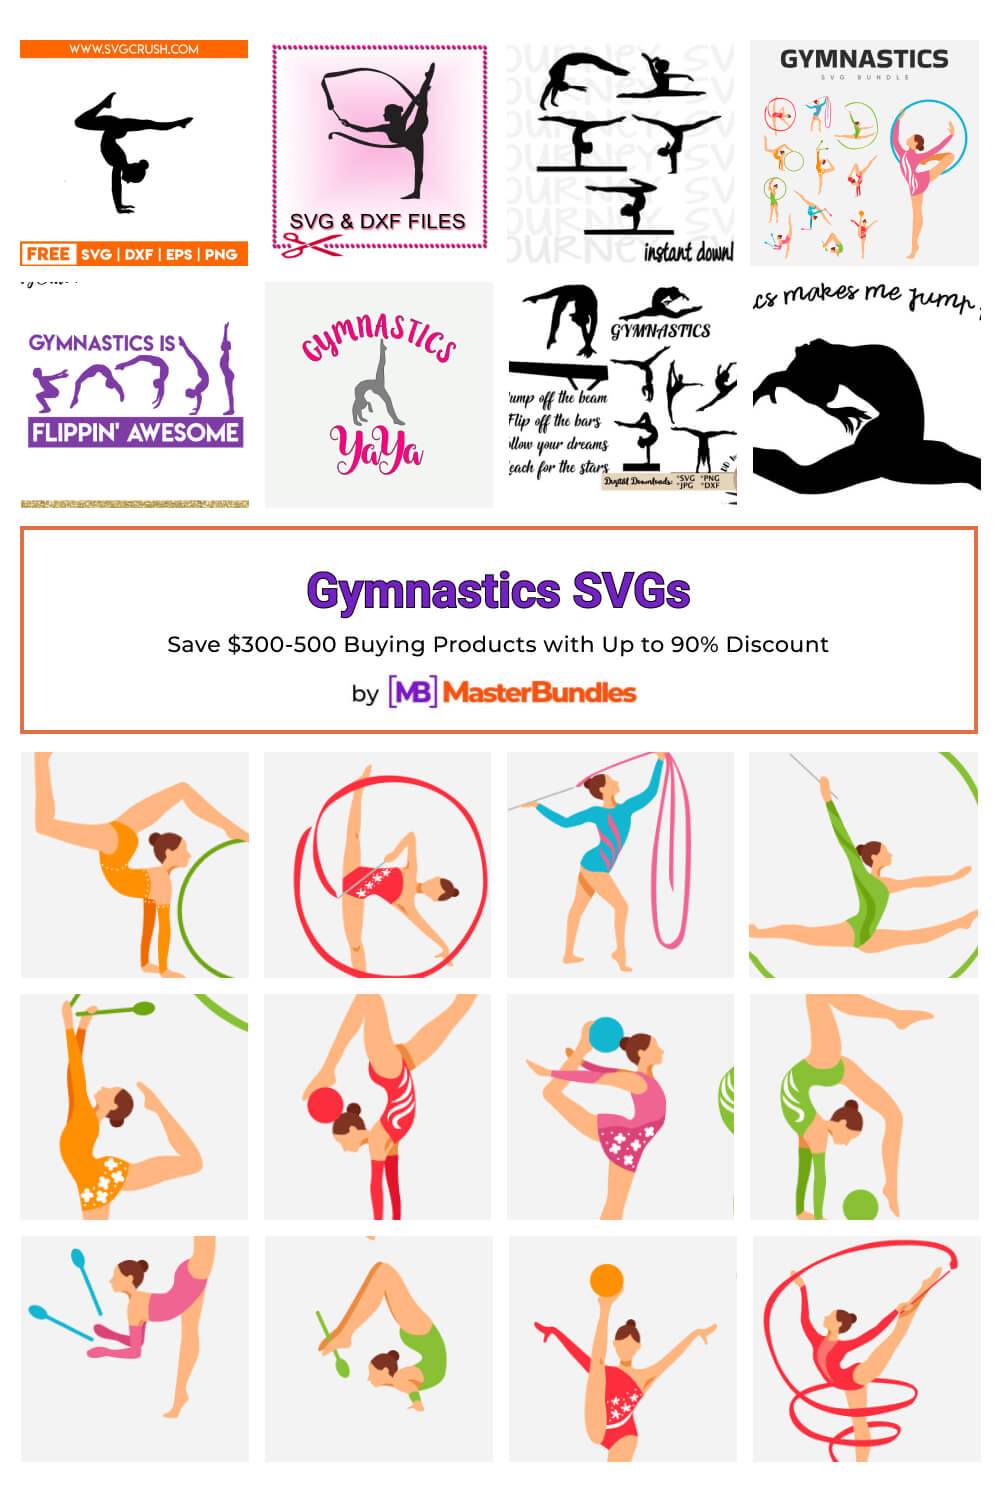 gymnastics svgs pinterest image.